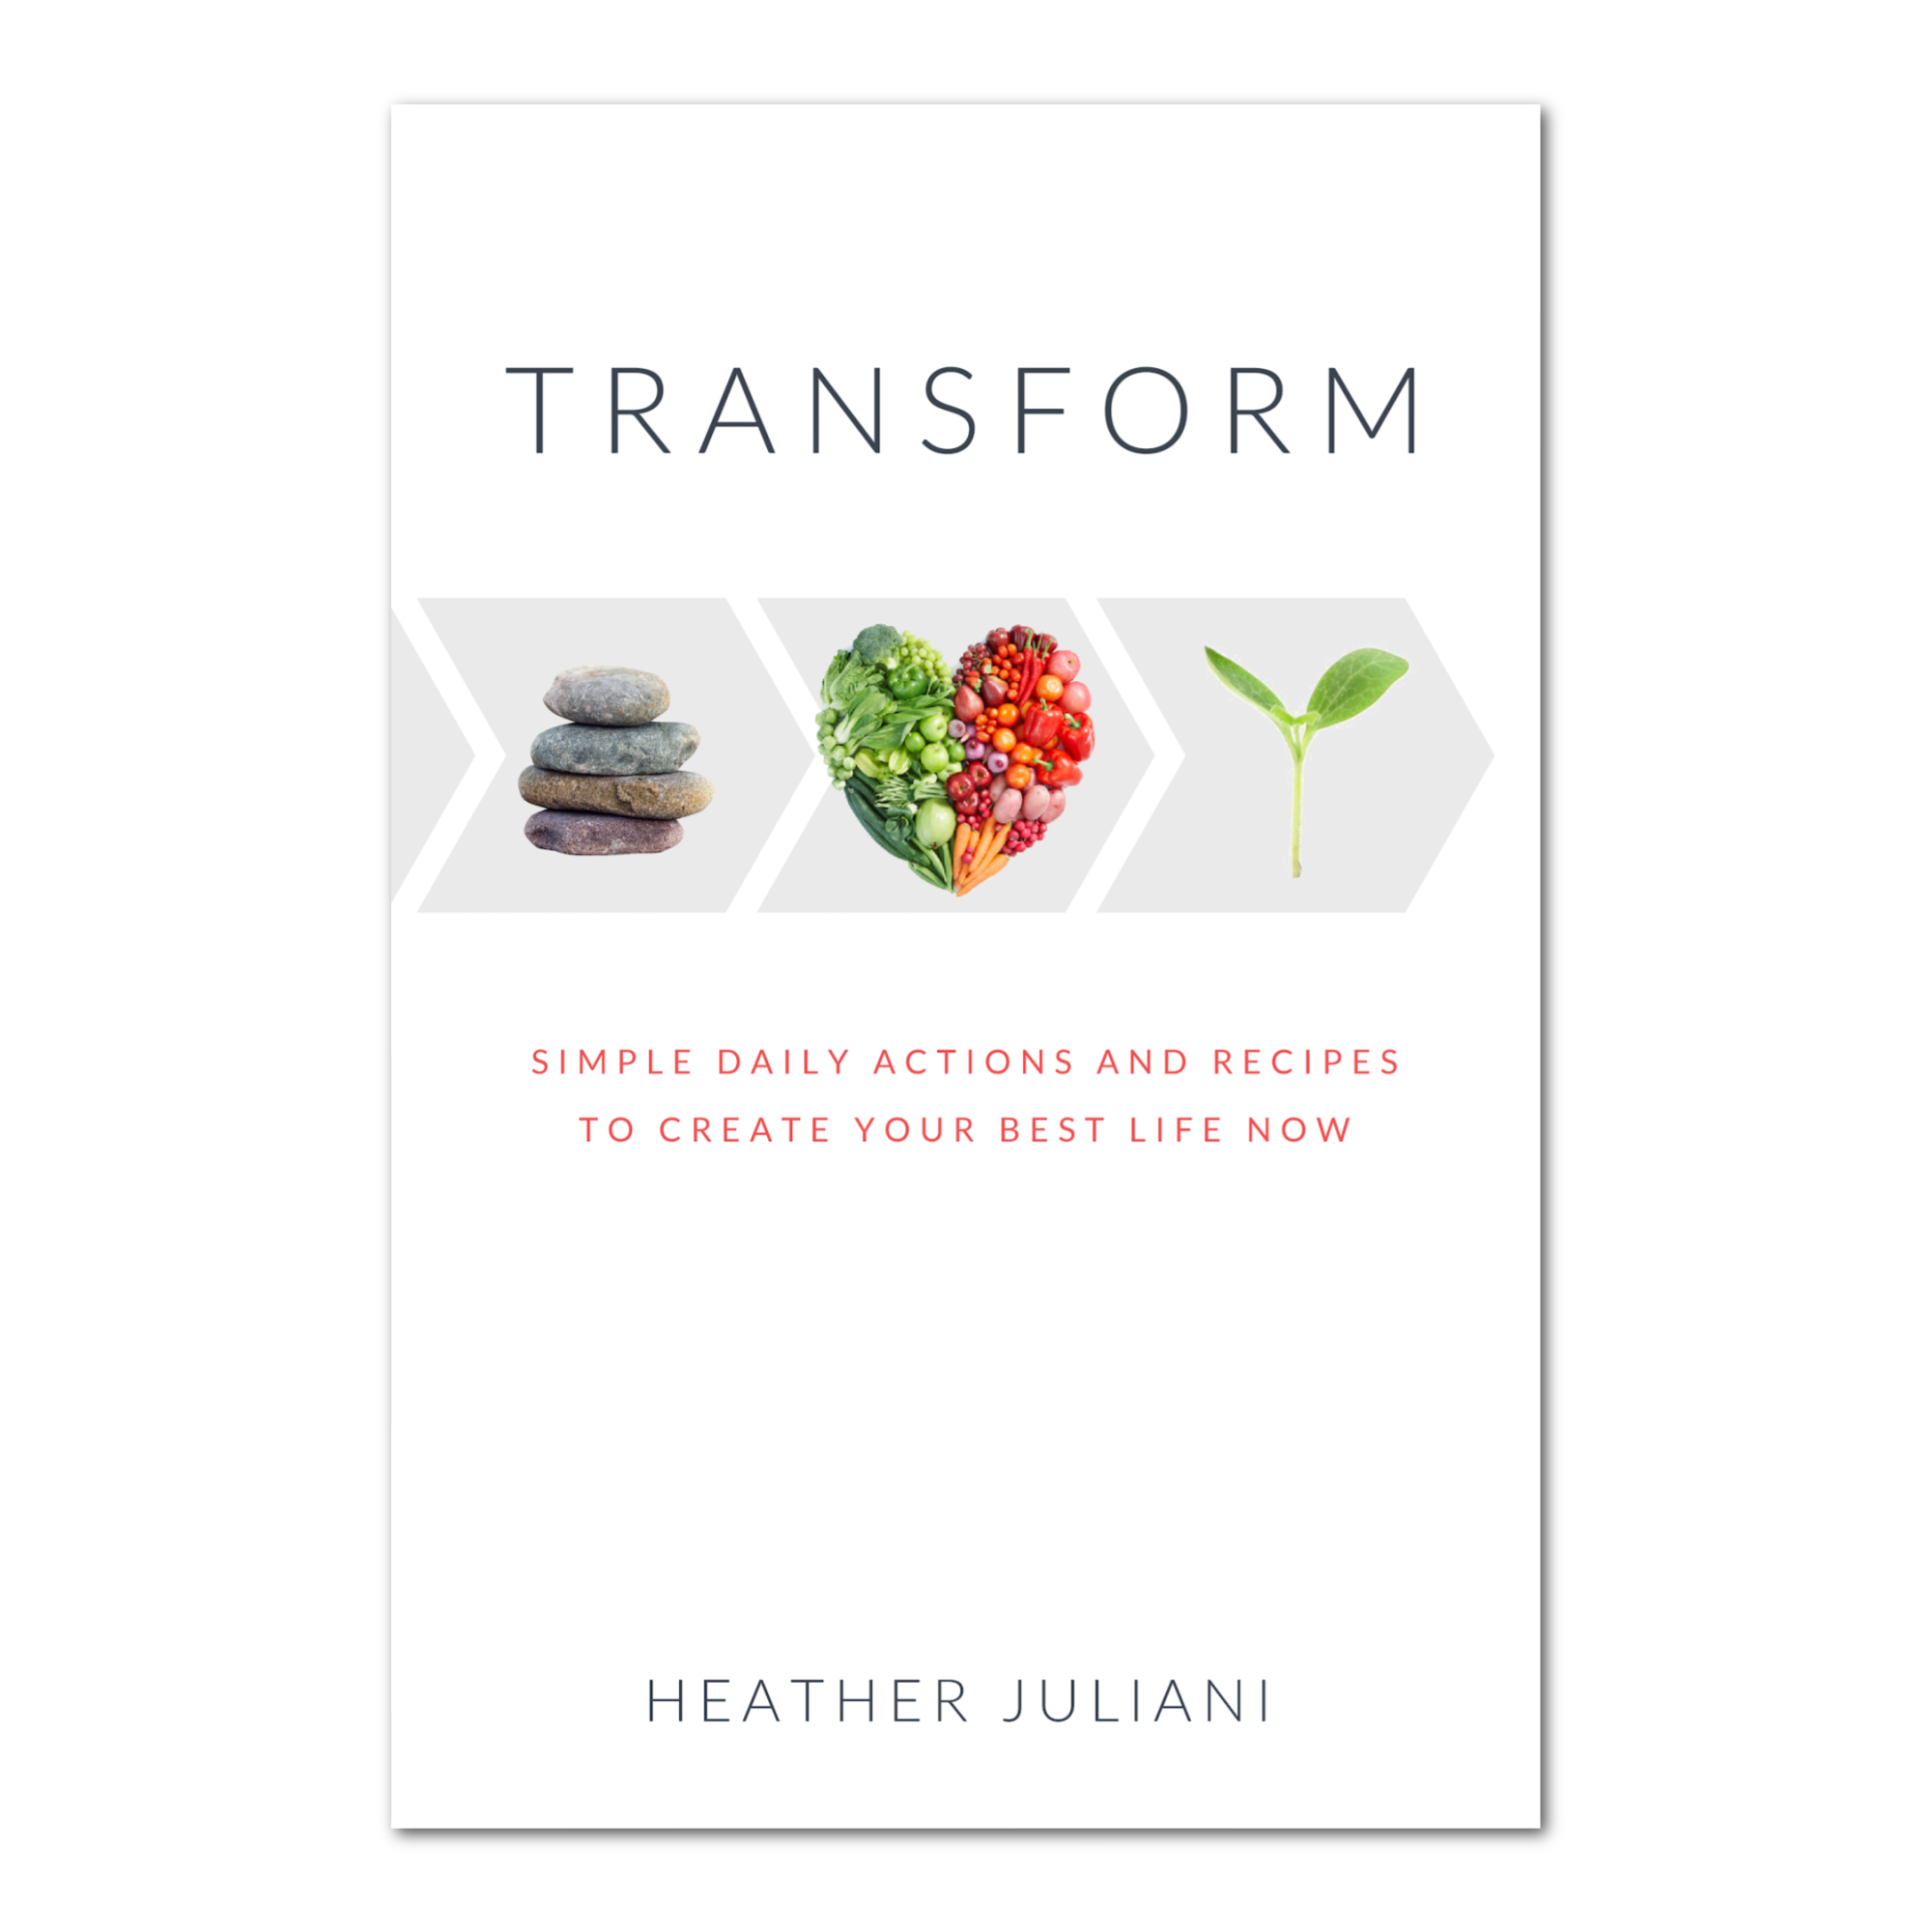 'Transform' book